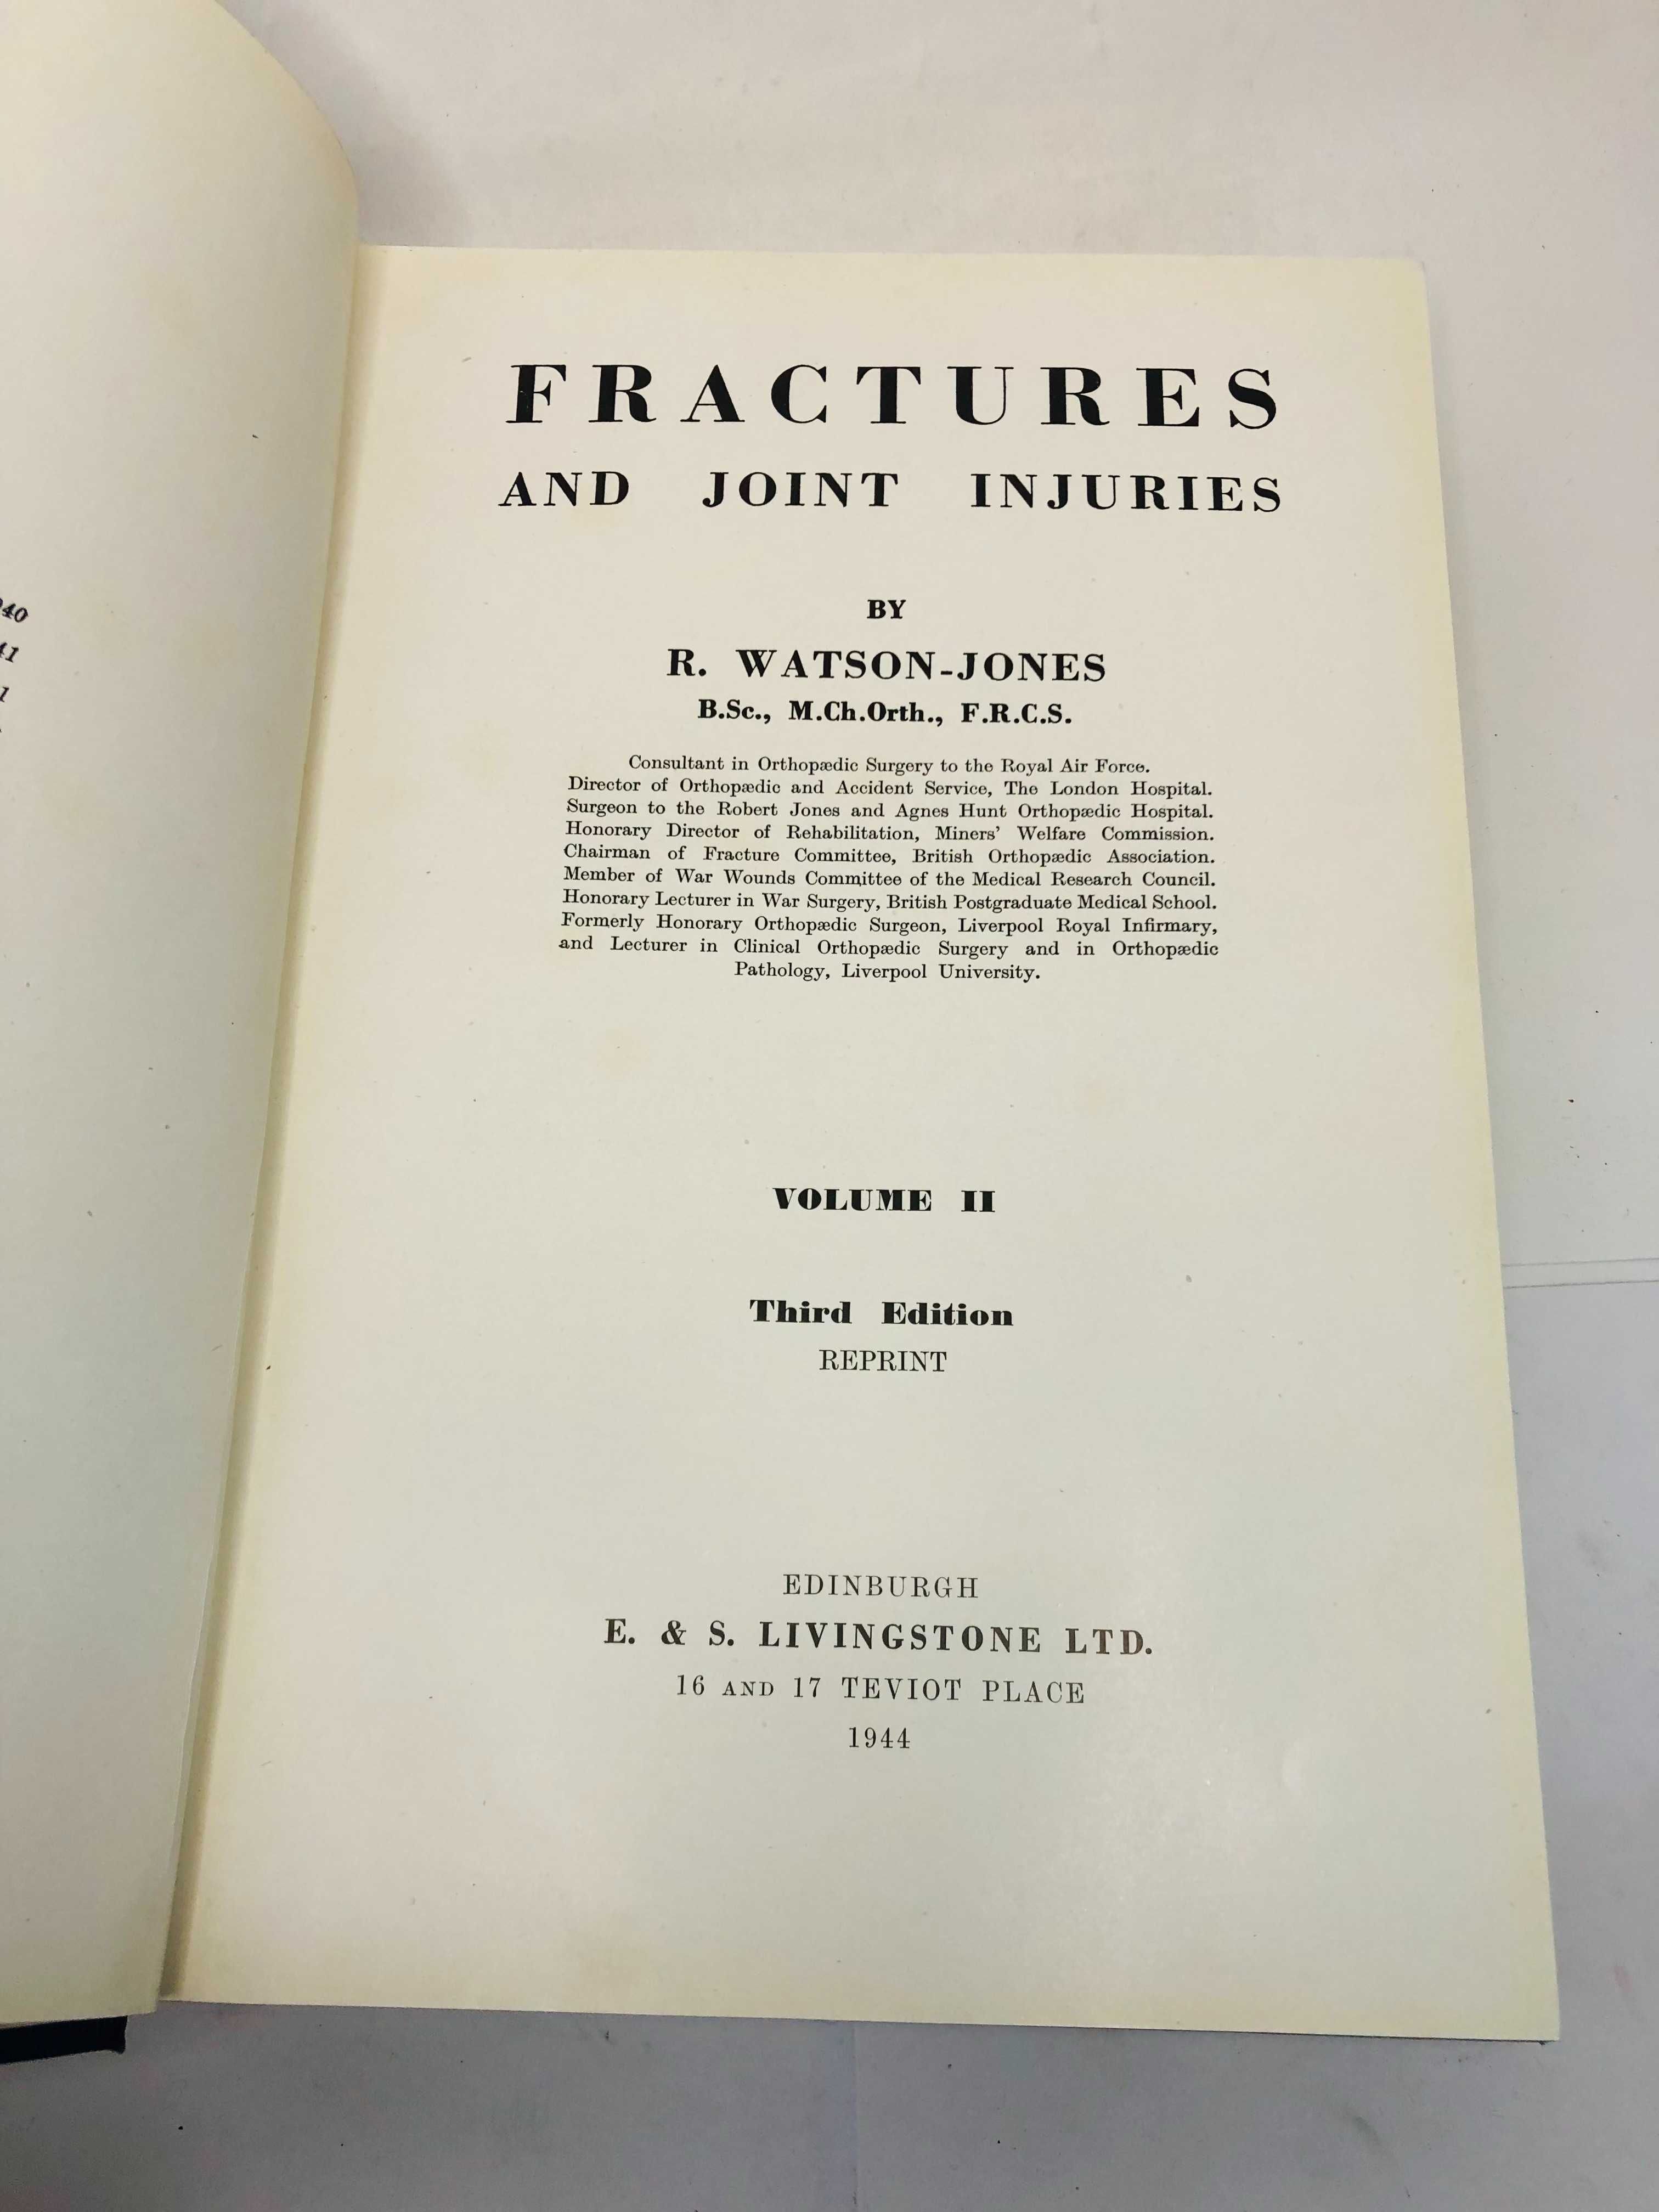 Fractures and Joint Injuries Volume II 1944 - R. Watson-Jones